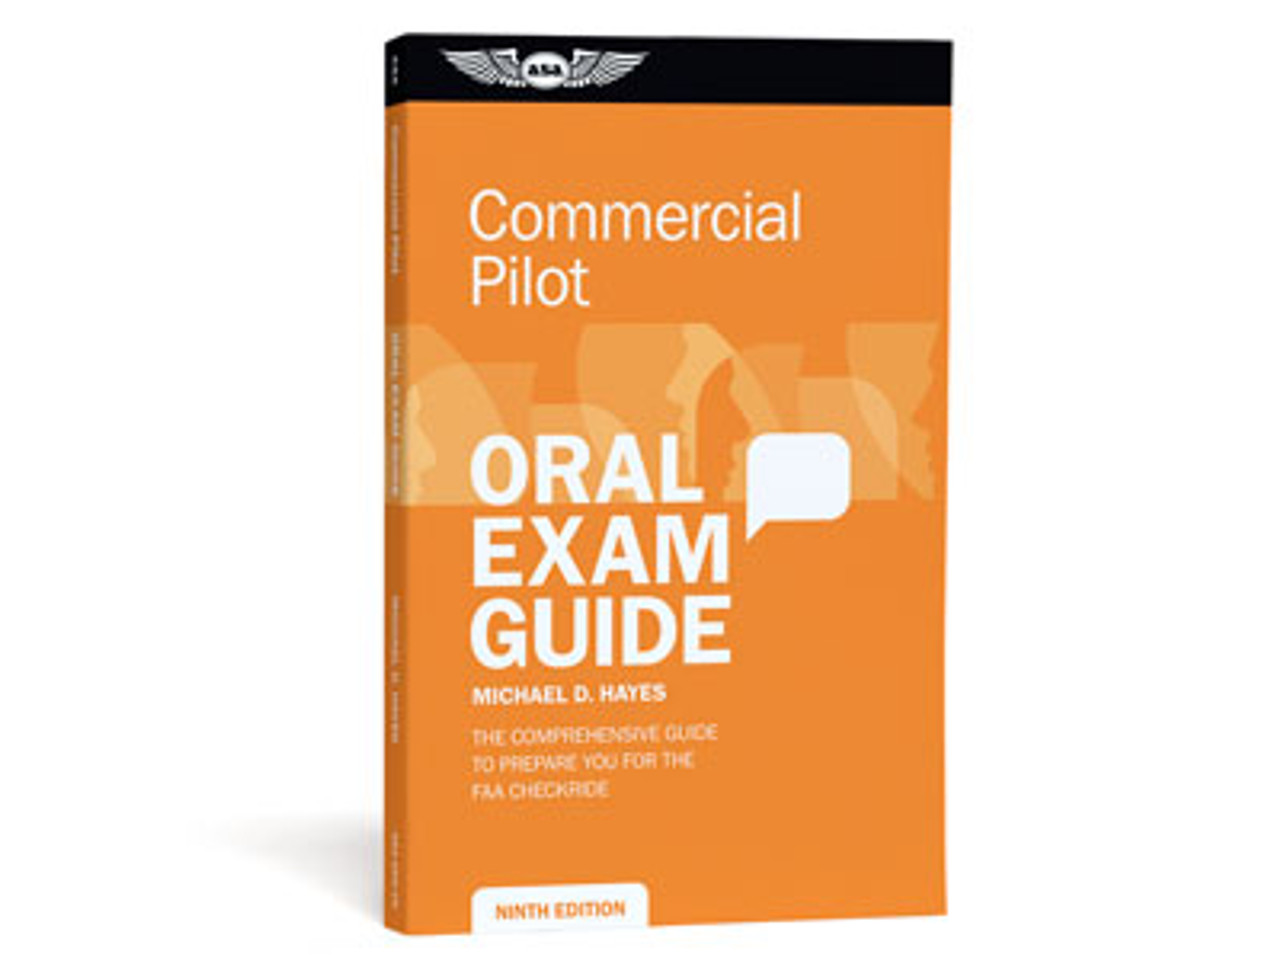 ASA Oral Exam Guide: Commercial